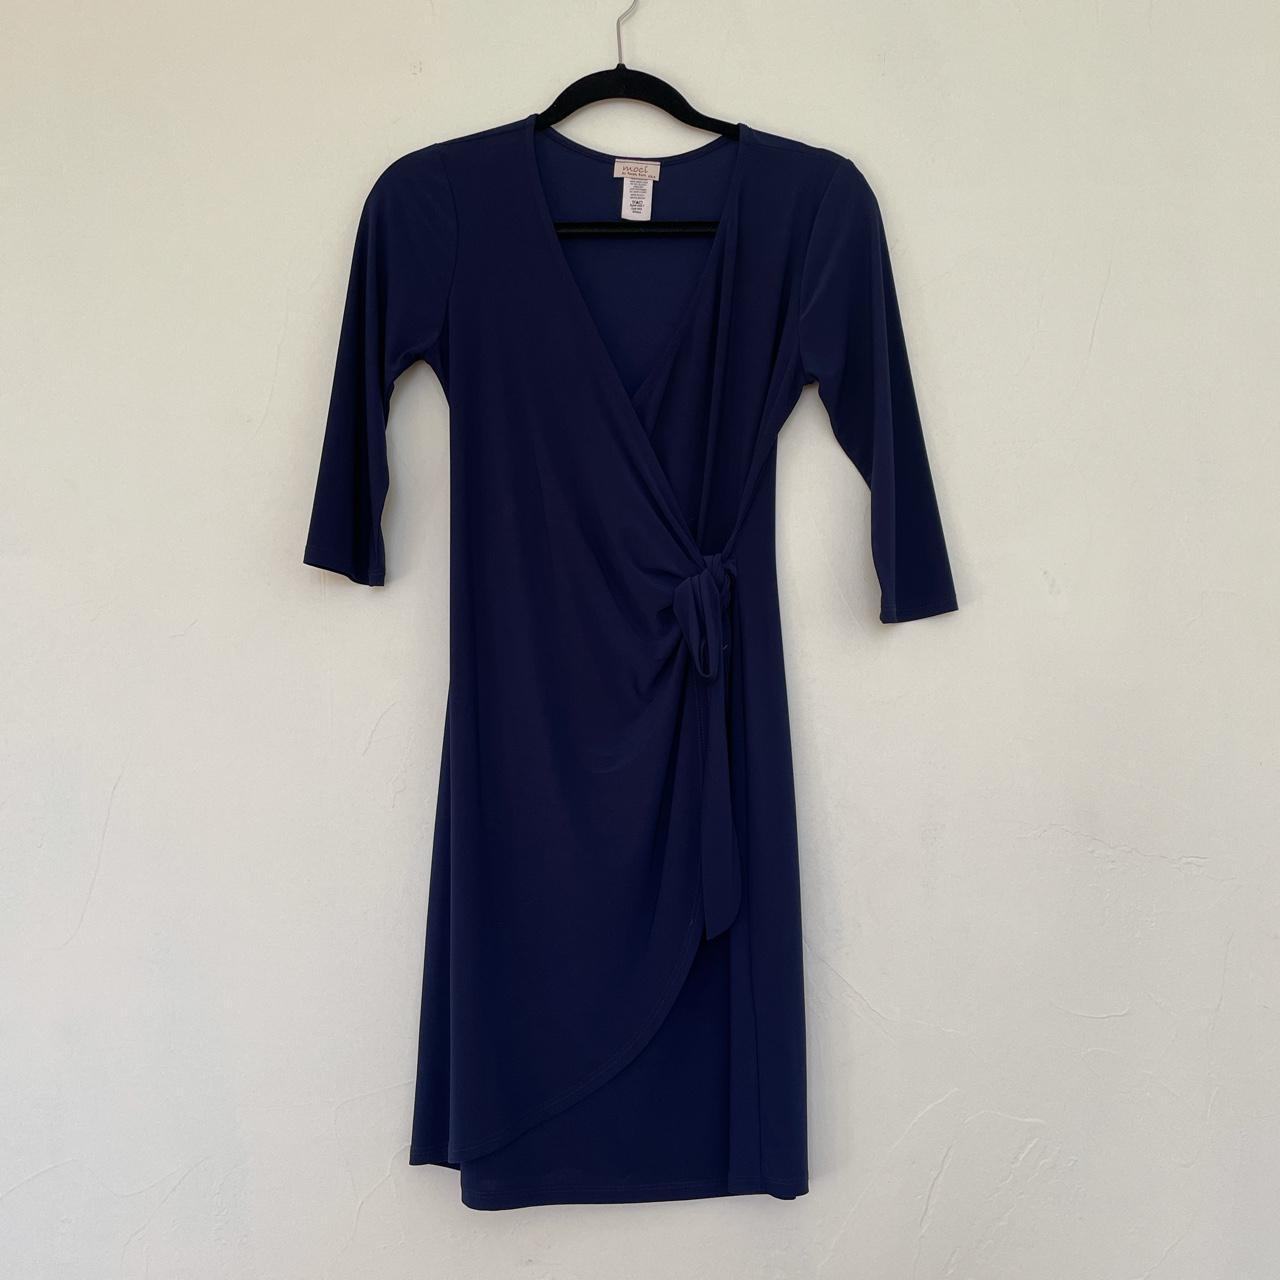 Product Image 2 - Navy/Dark blue mini wrap dress.